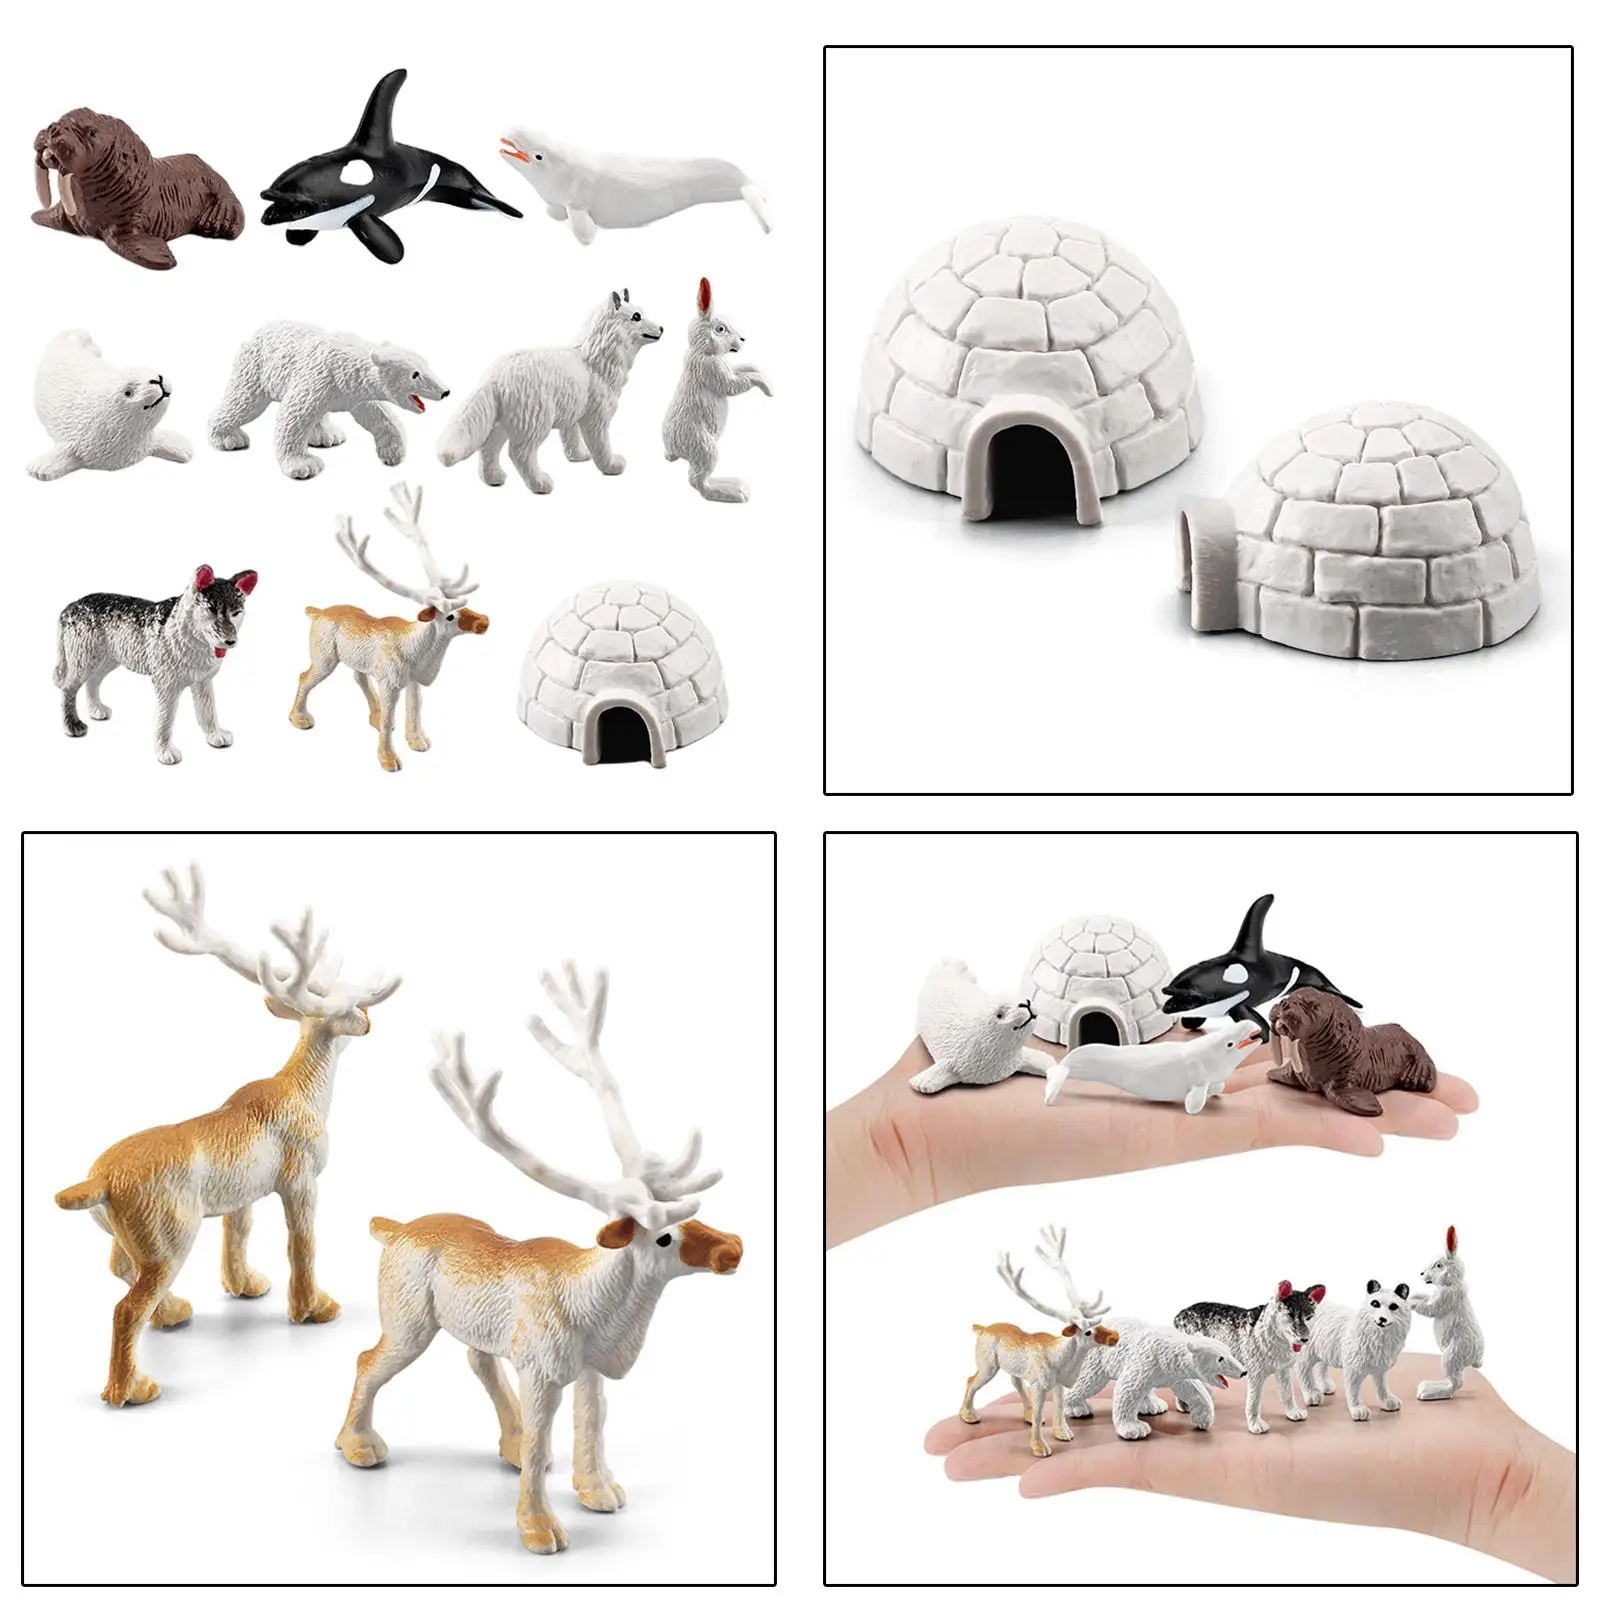 10 PCS Arctic Circle Sea Animals Figurines, Resin Arctic Animal Figure Set Includes Polar Bear,Caribou,Whales,Walrus,Igloo etcs